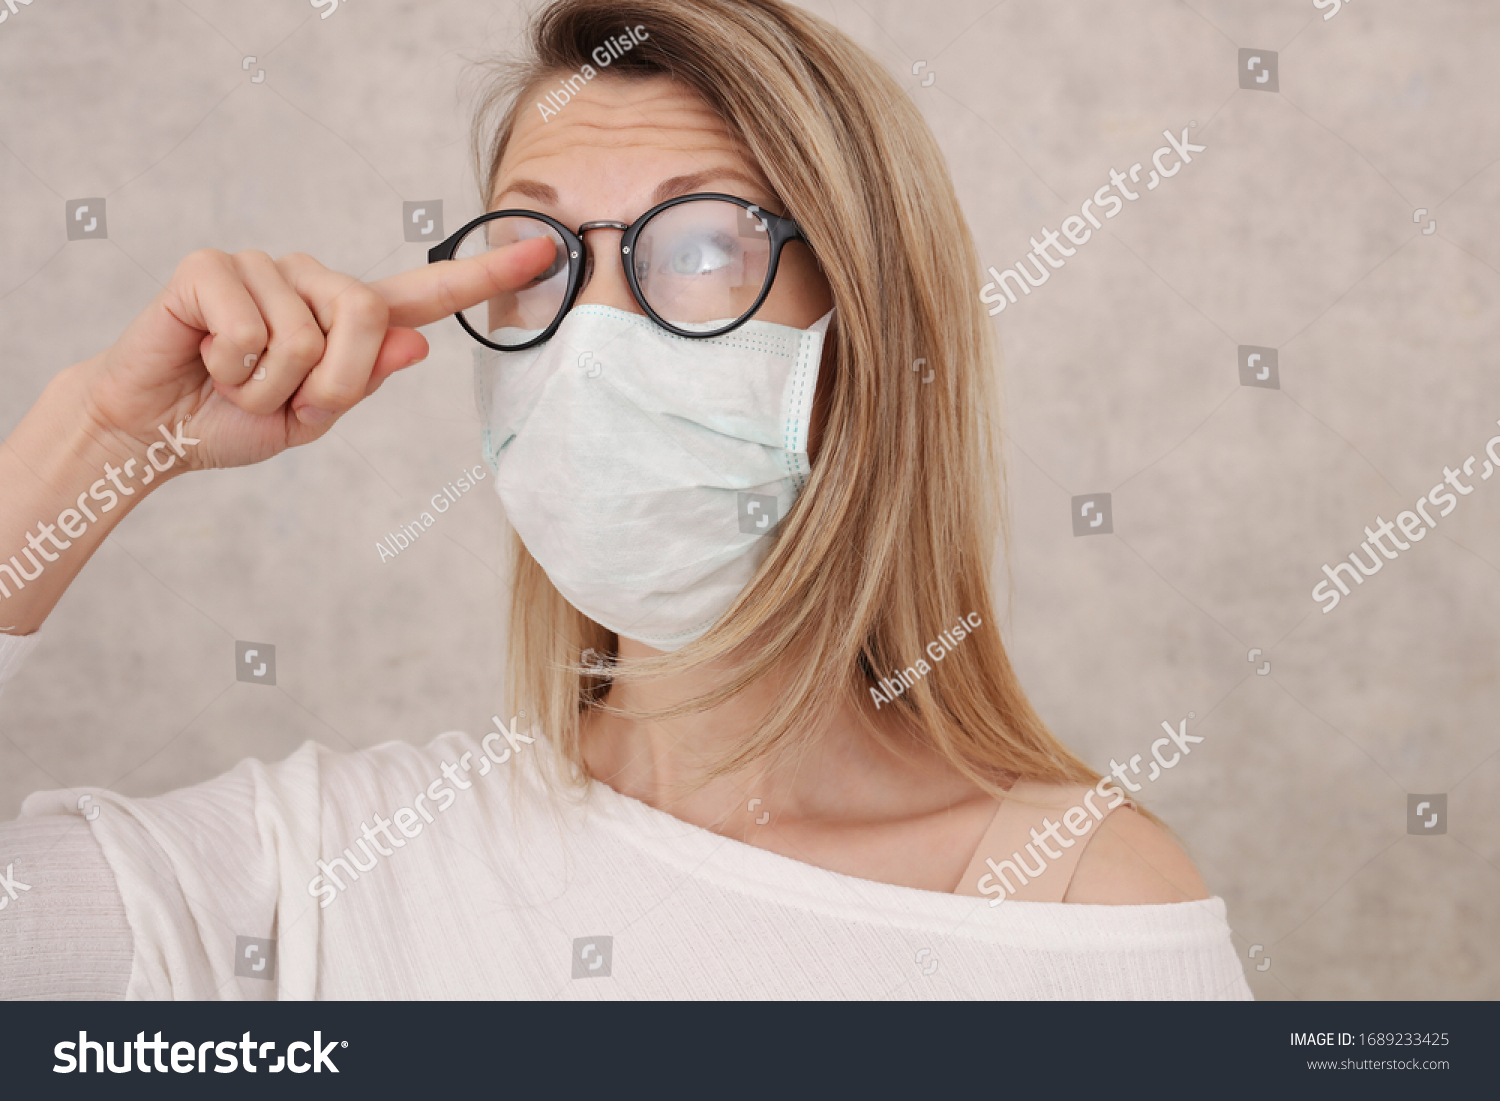 Medical mask and Glasses fogging. Avoid face touching, Coronavirus prevention, Protection. #1689233425